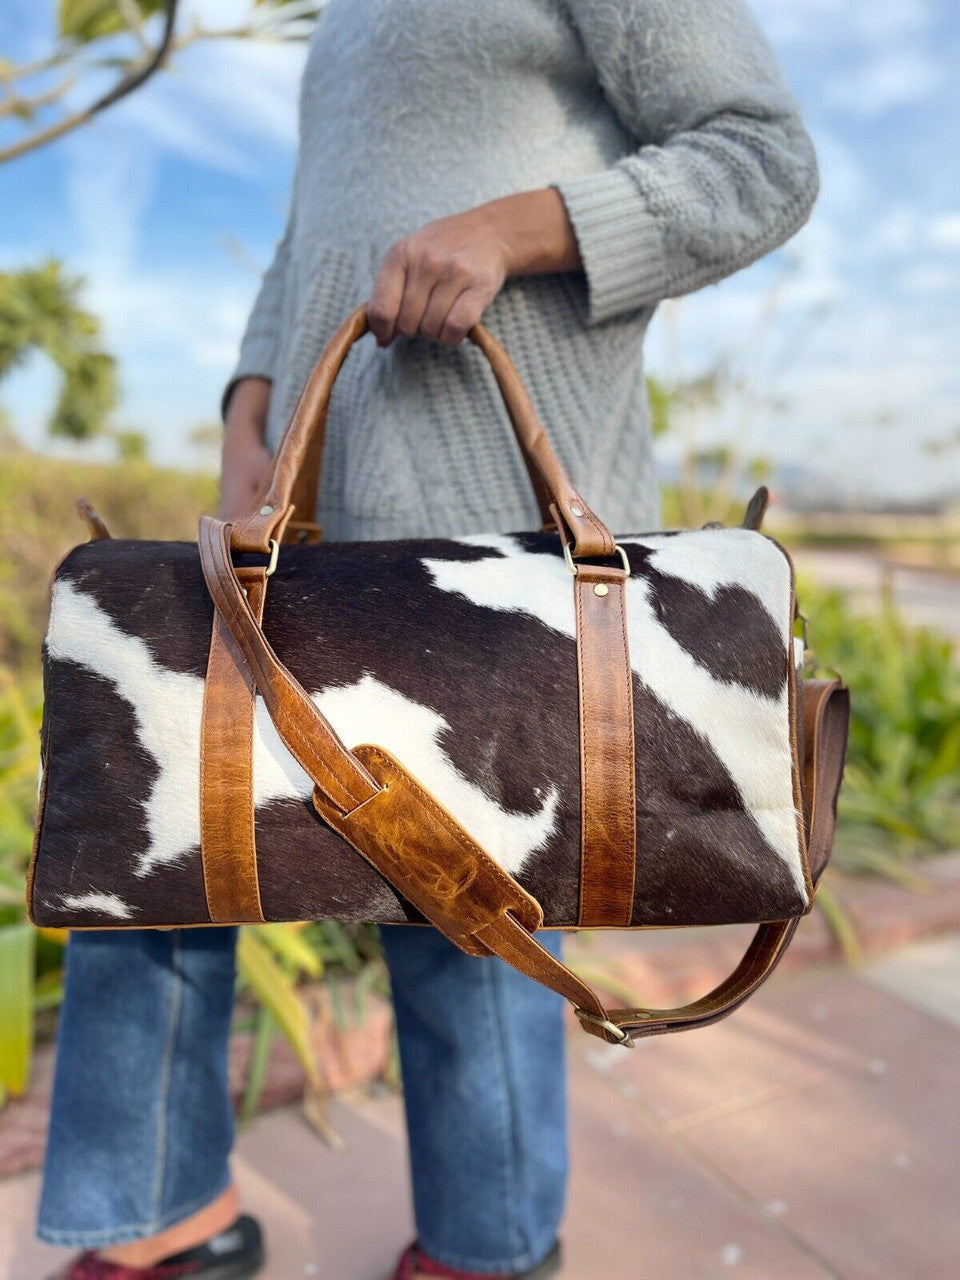 Elegant cowhide travel bag ideal for long-distance travel.